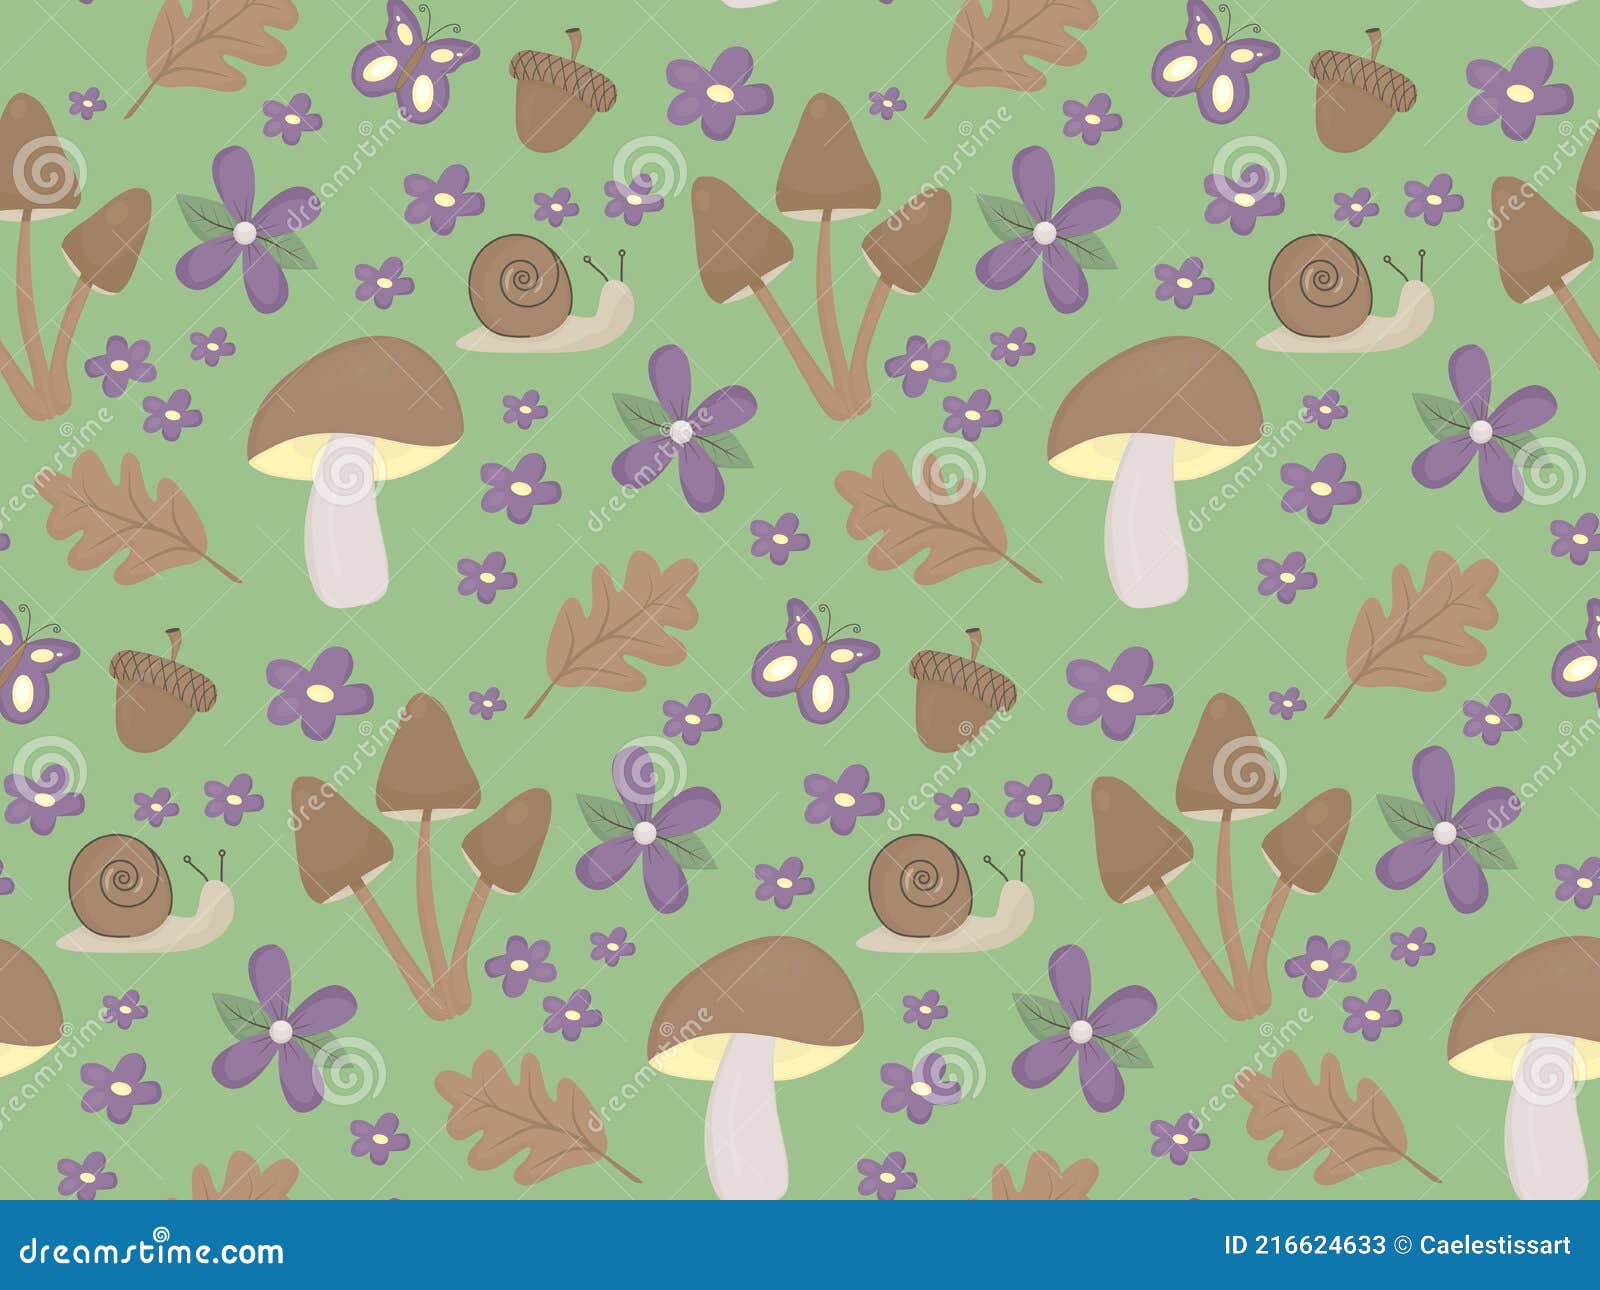 Cottagecore Mushroom Fabric Wallpaper and Home Decor  Spoonflower